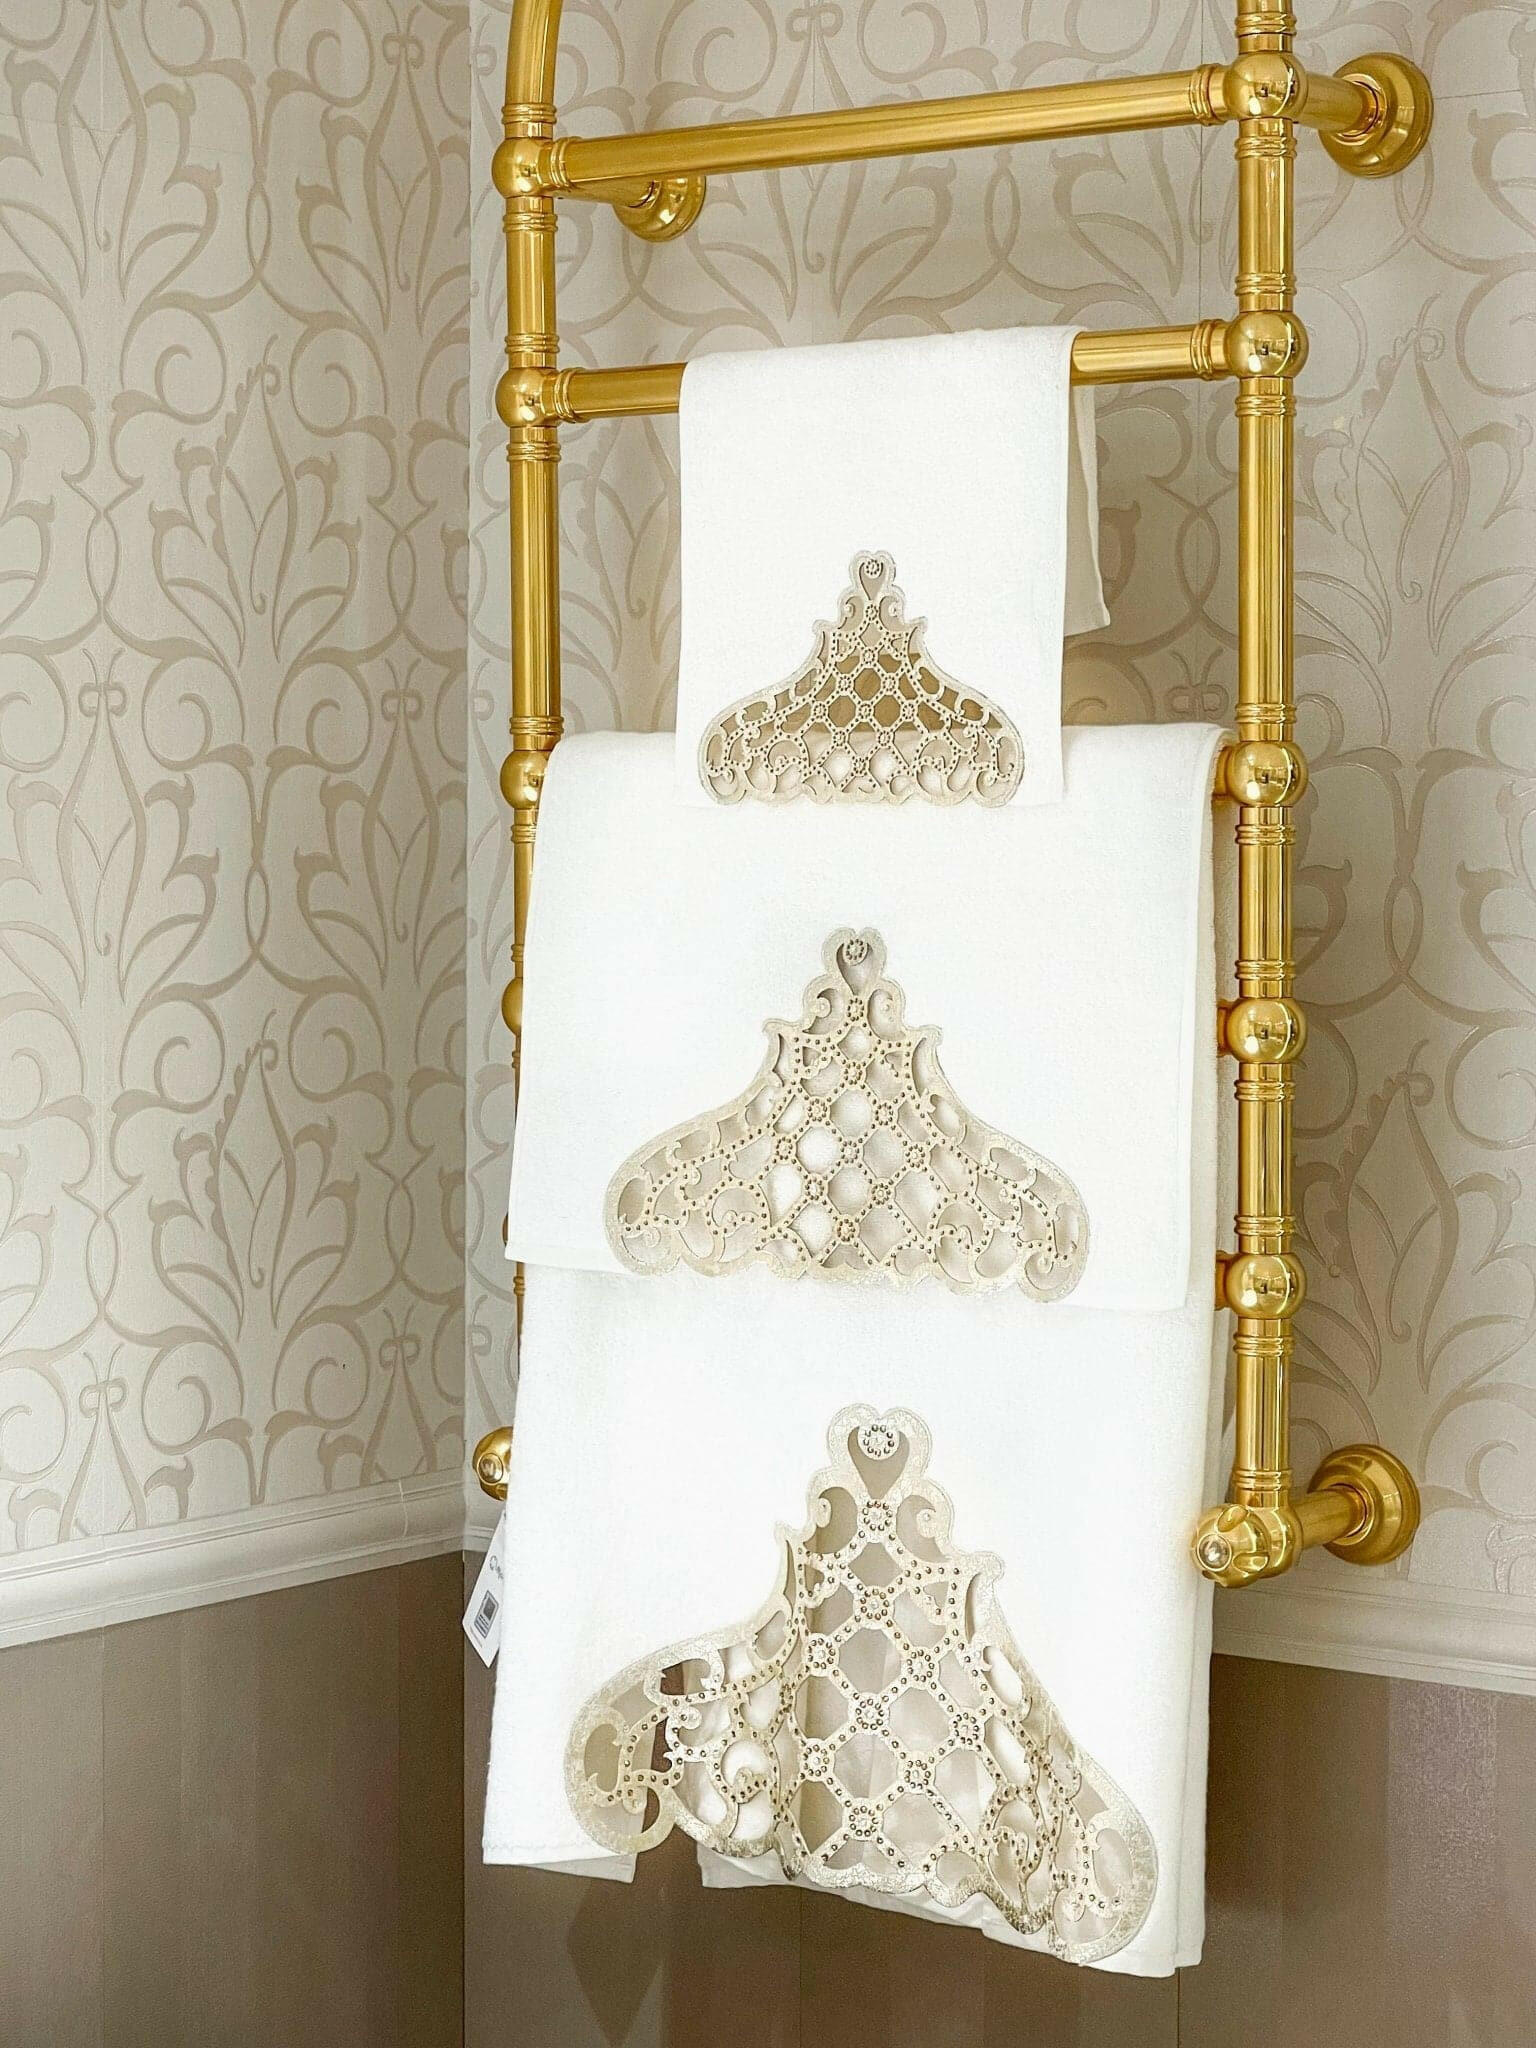 Mihrace Towel Set - Creative Home Designs,Cut Through Gold Leather Velvet Luxury Cream Turkish Oriental Towel with Velvet and Diamonds